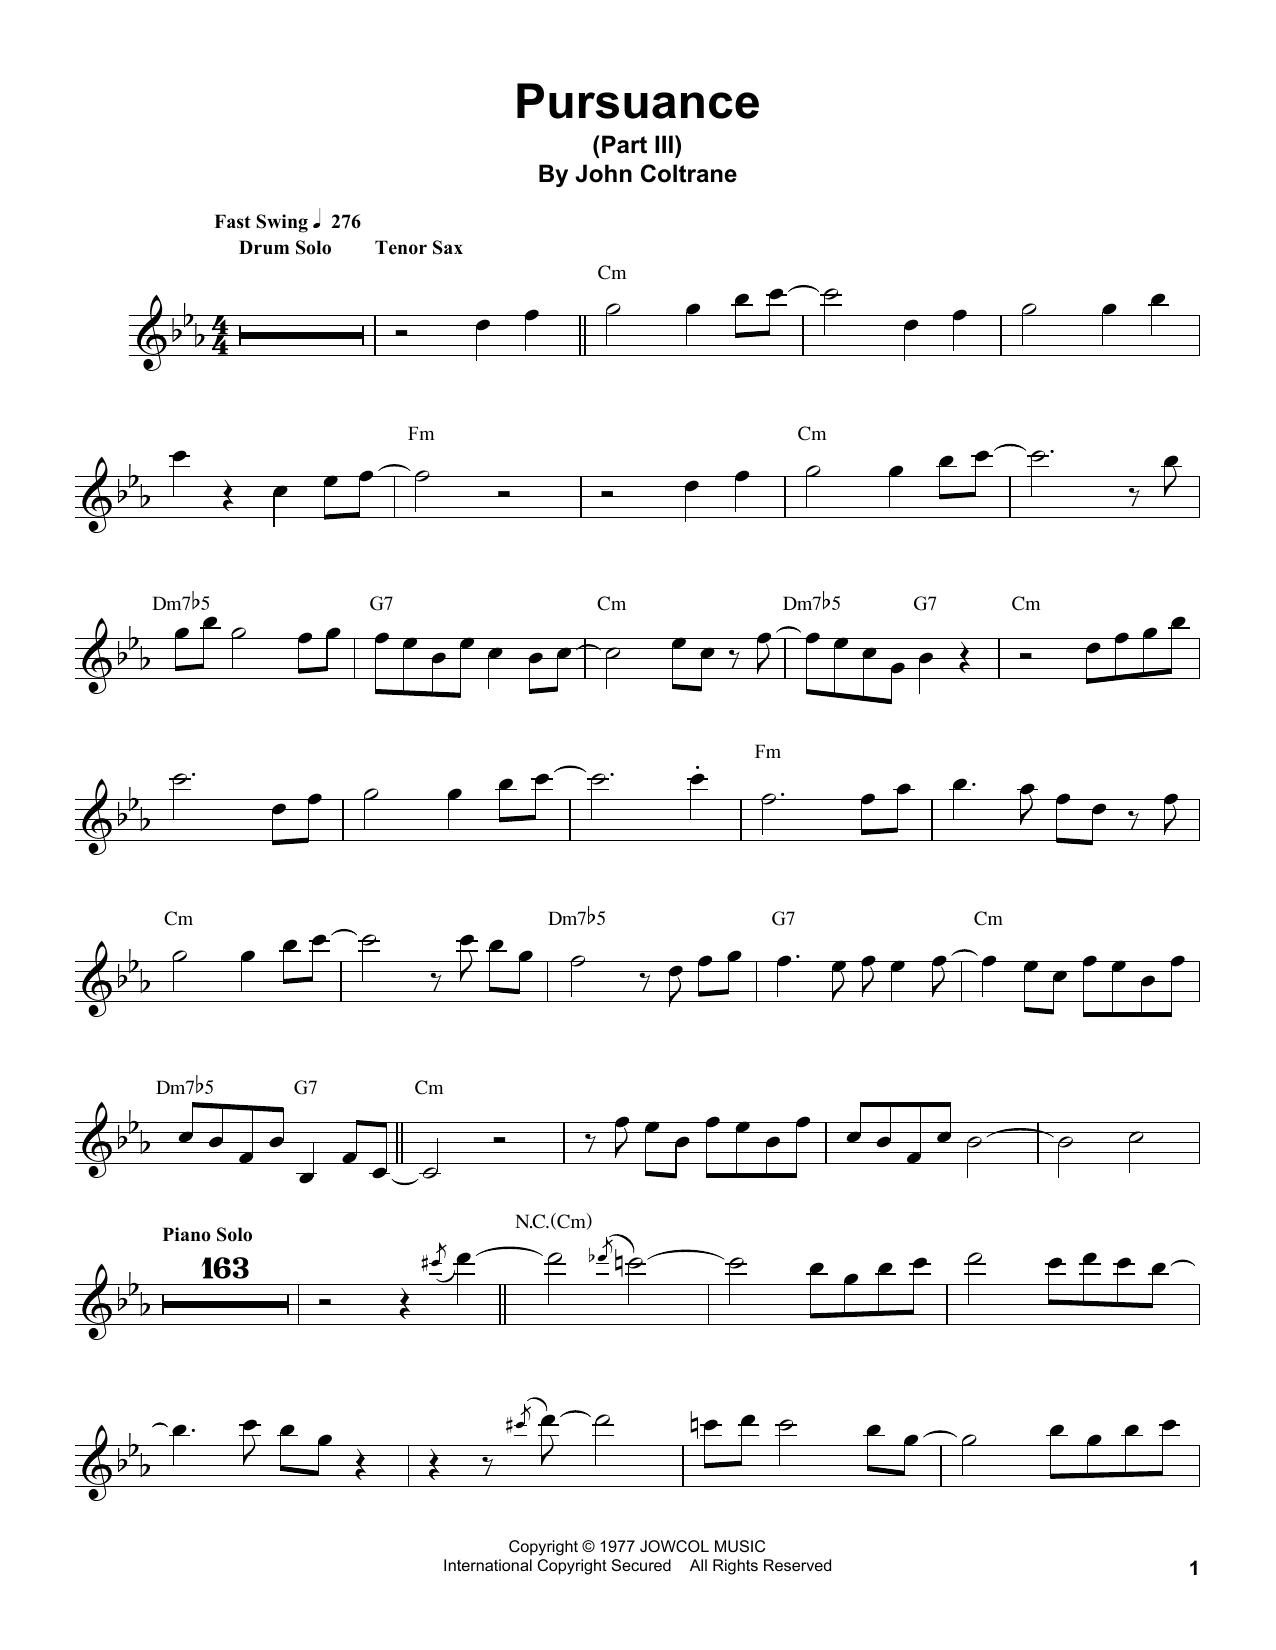 John Coltrane Pursuance Sheet Music Notes & Chords for Tenor Sax Transcription - Download or Print PDF